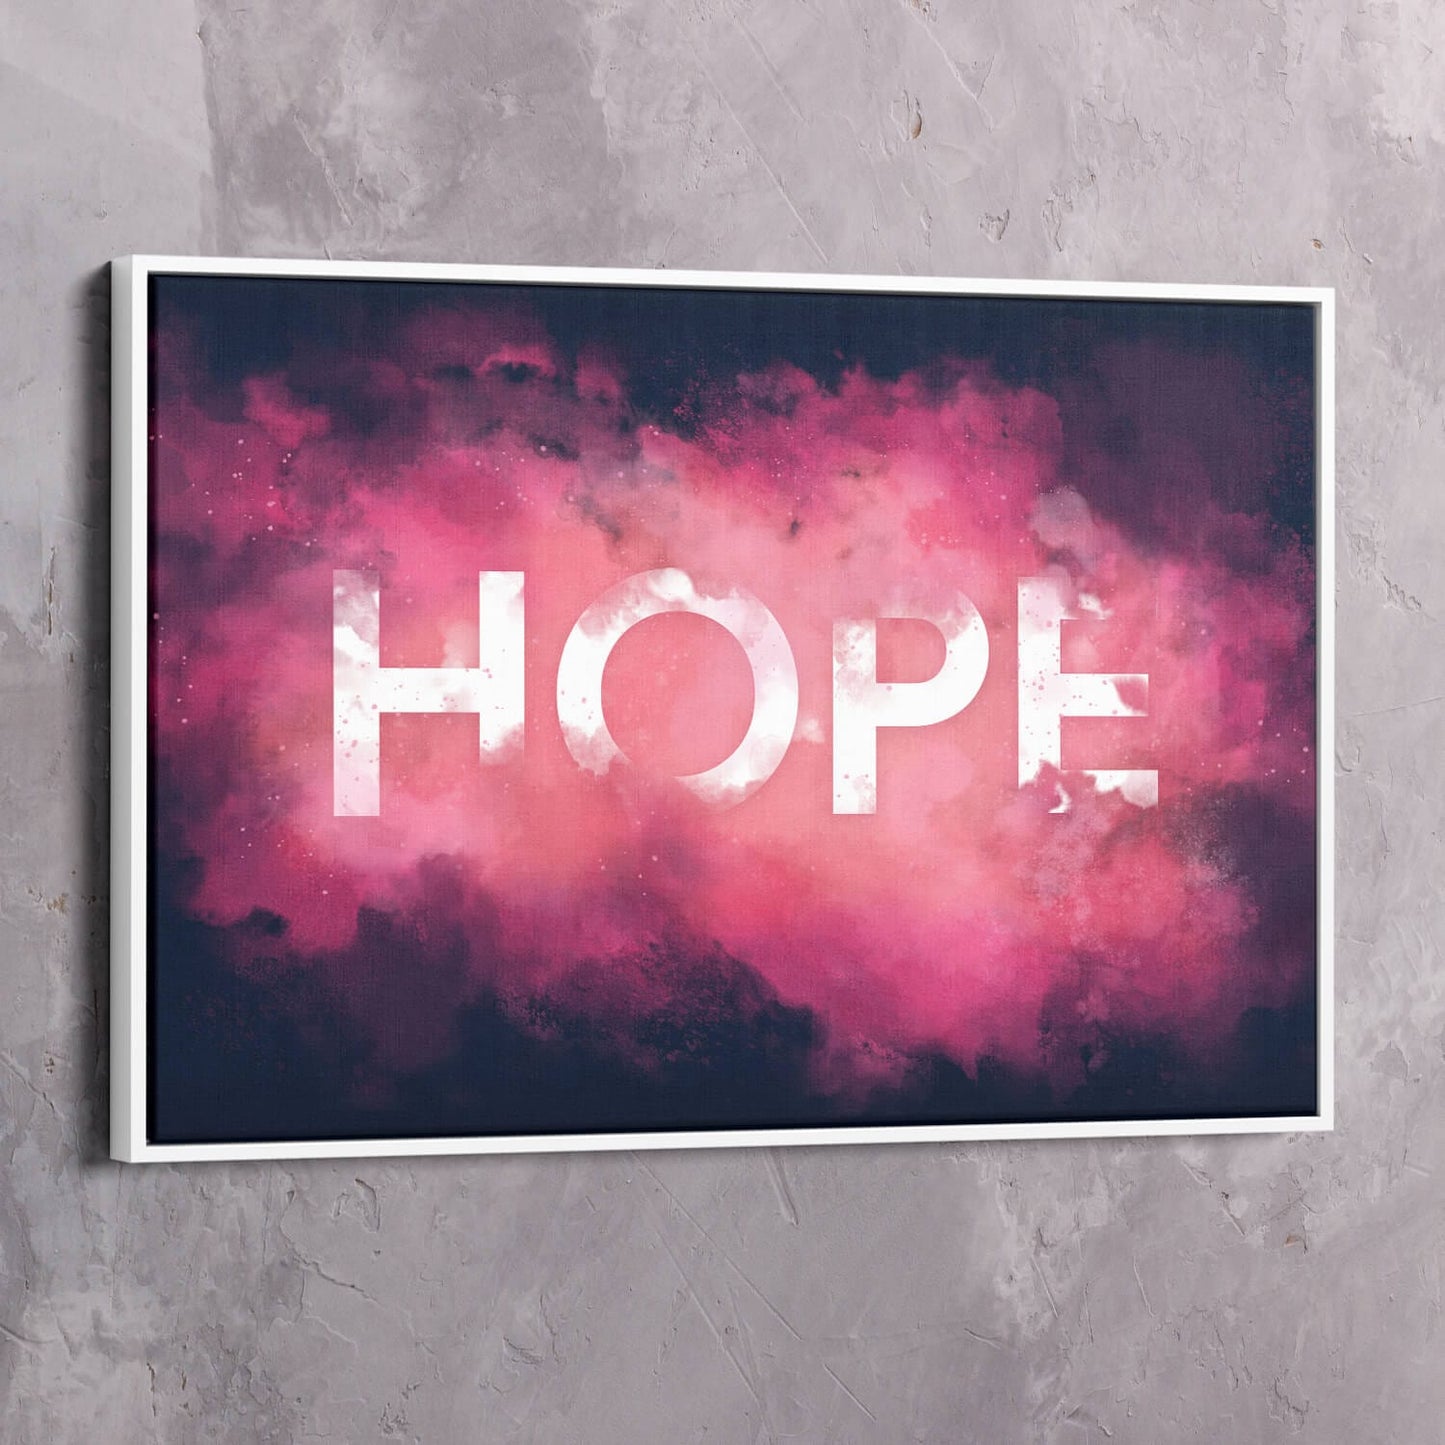 HOPE Smoke Wall Art | Inspirational Wall Art Motivational Wall Art Quotes Office Art | ImpaktMaker Exclusive Canvas Art Landscape